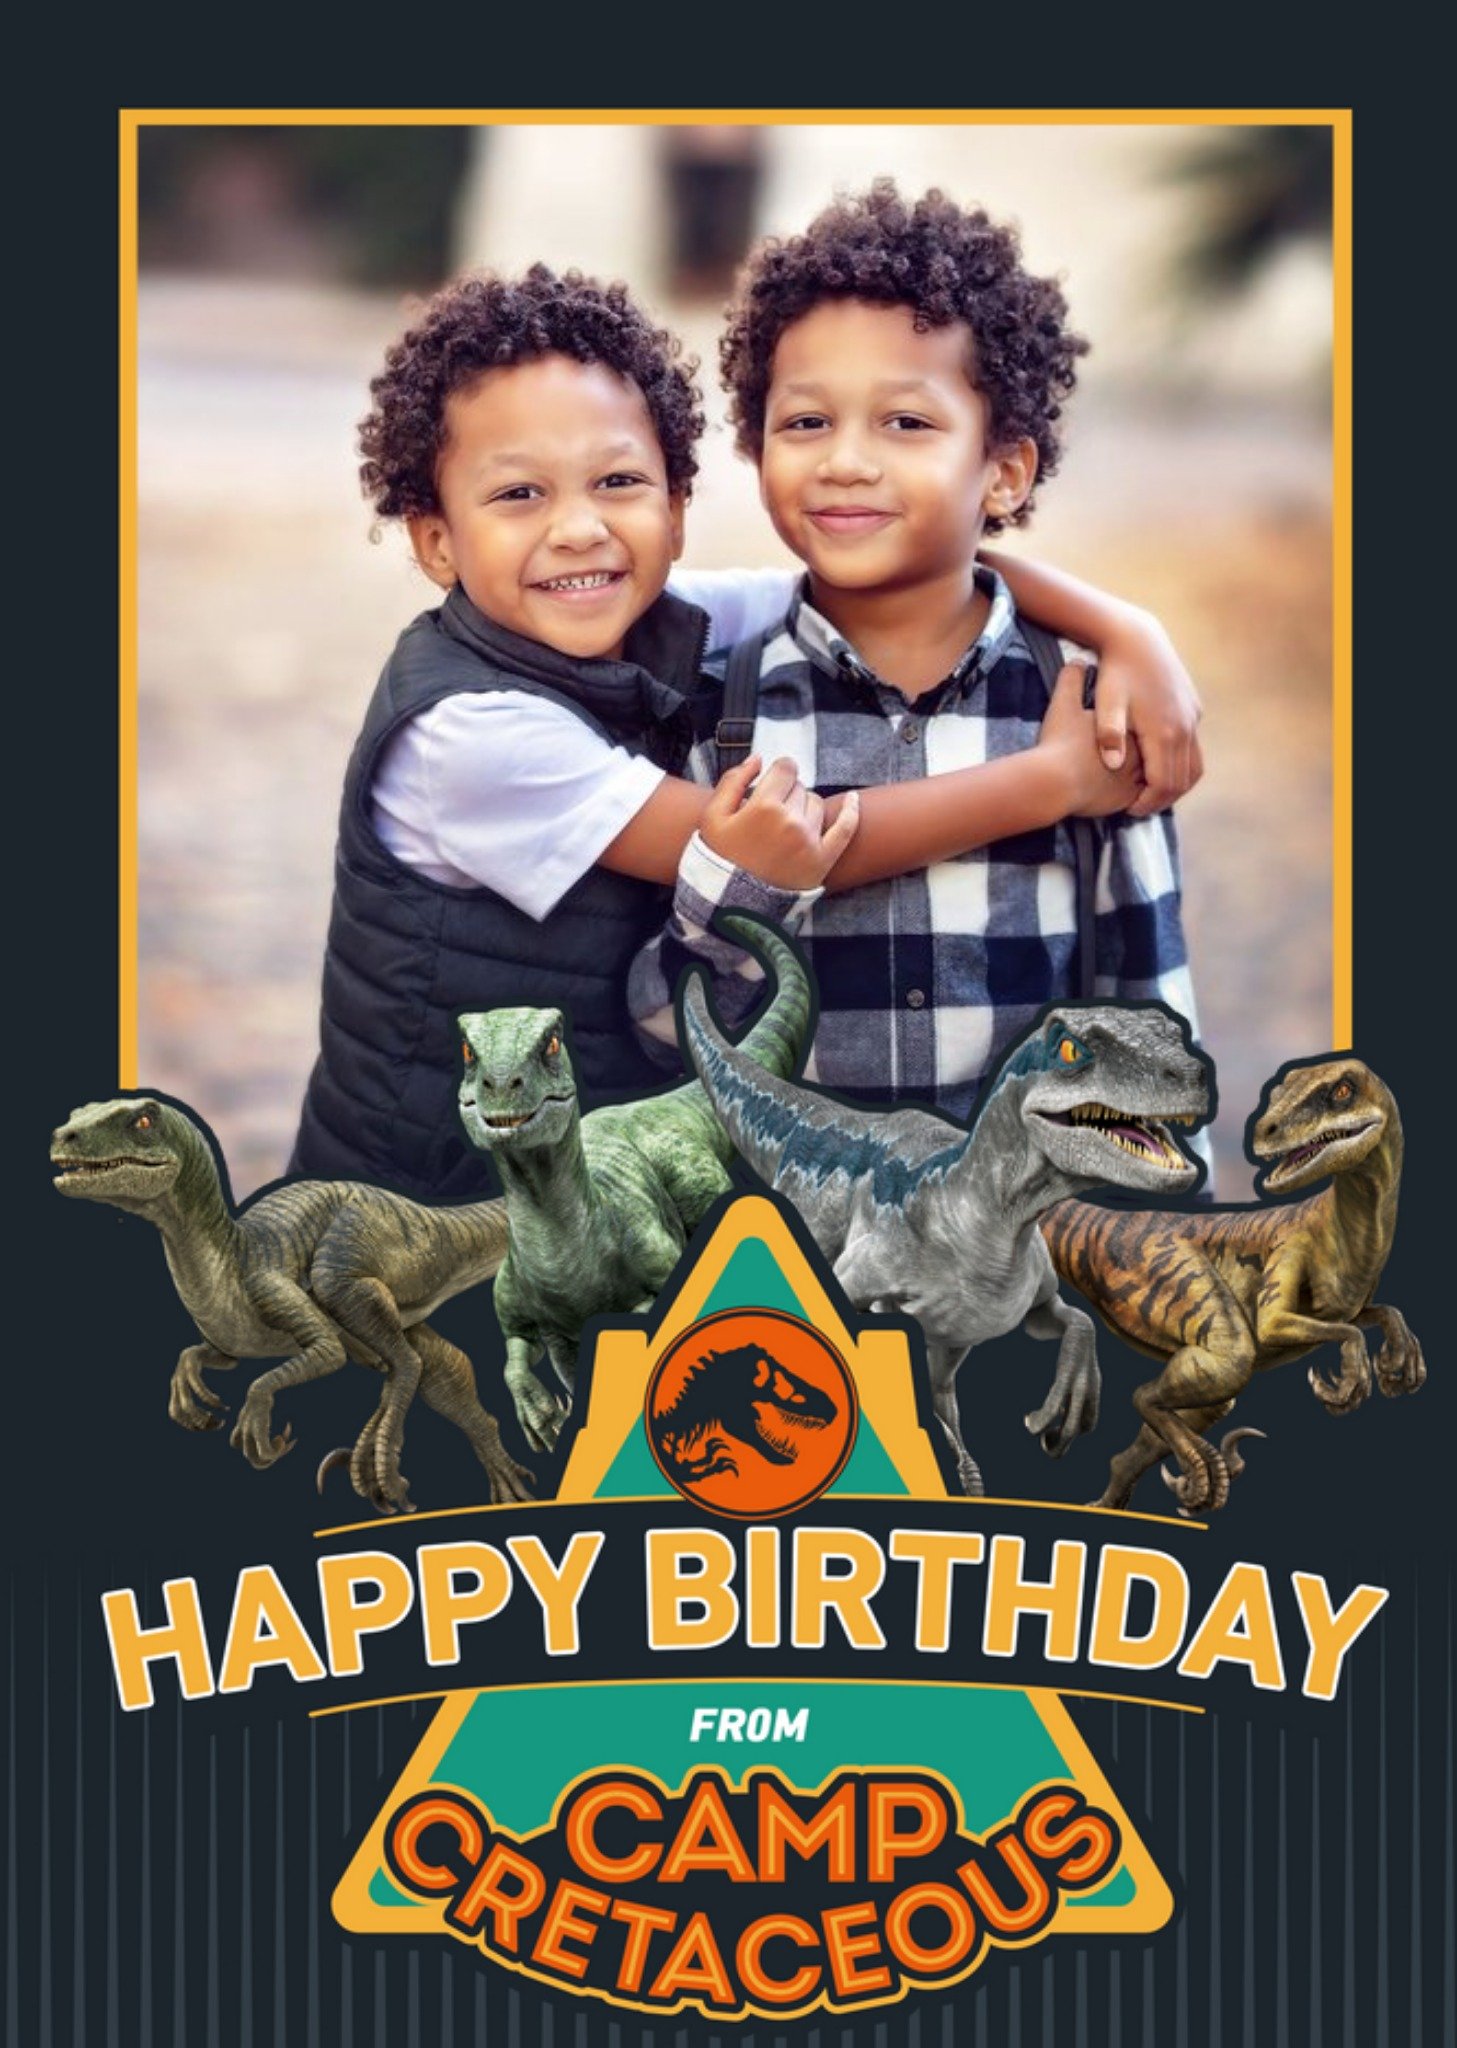 Jurassic World Jurassic Camp Cretaceous Dinosaur Raptor Photo Upload Birthday Card Ecard